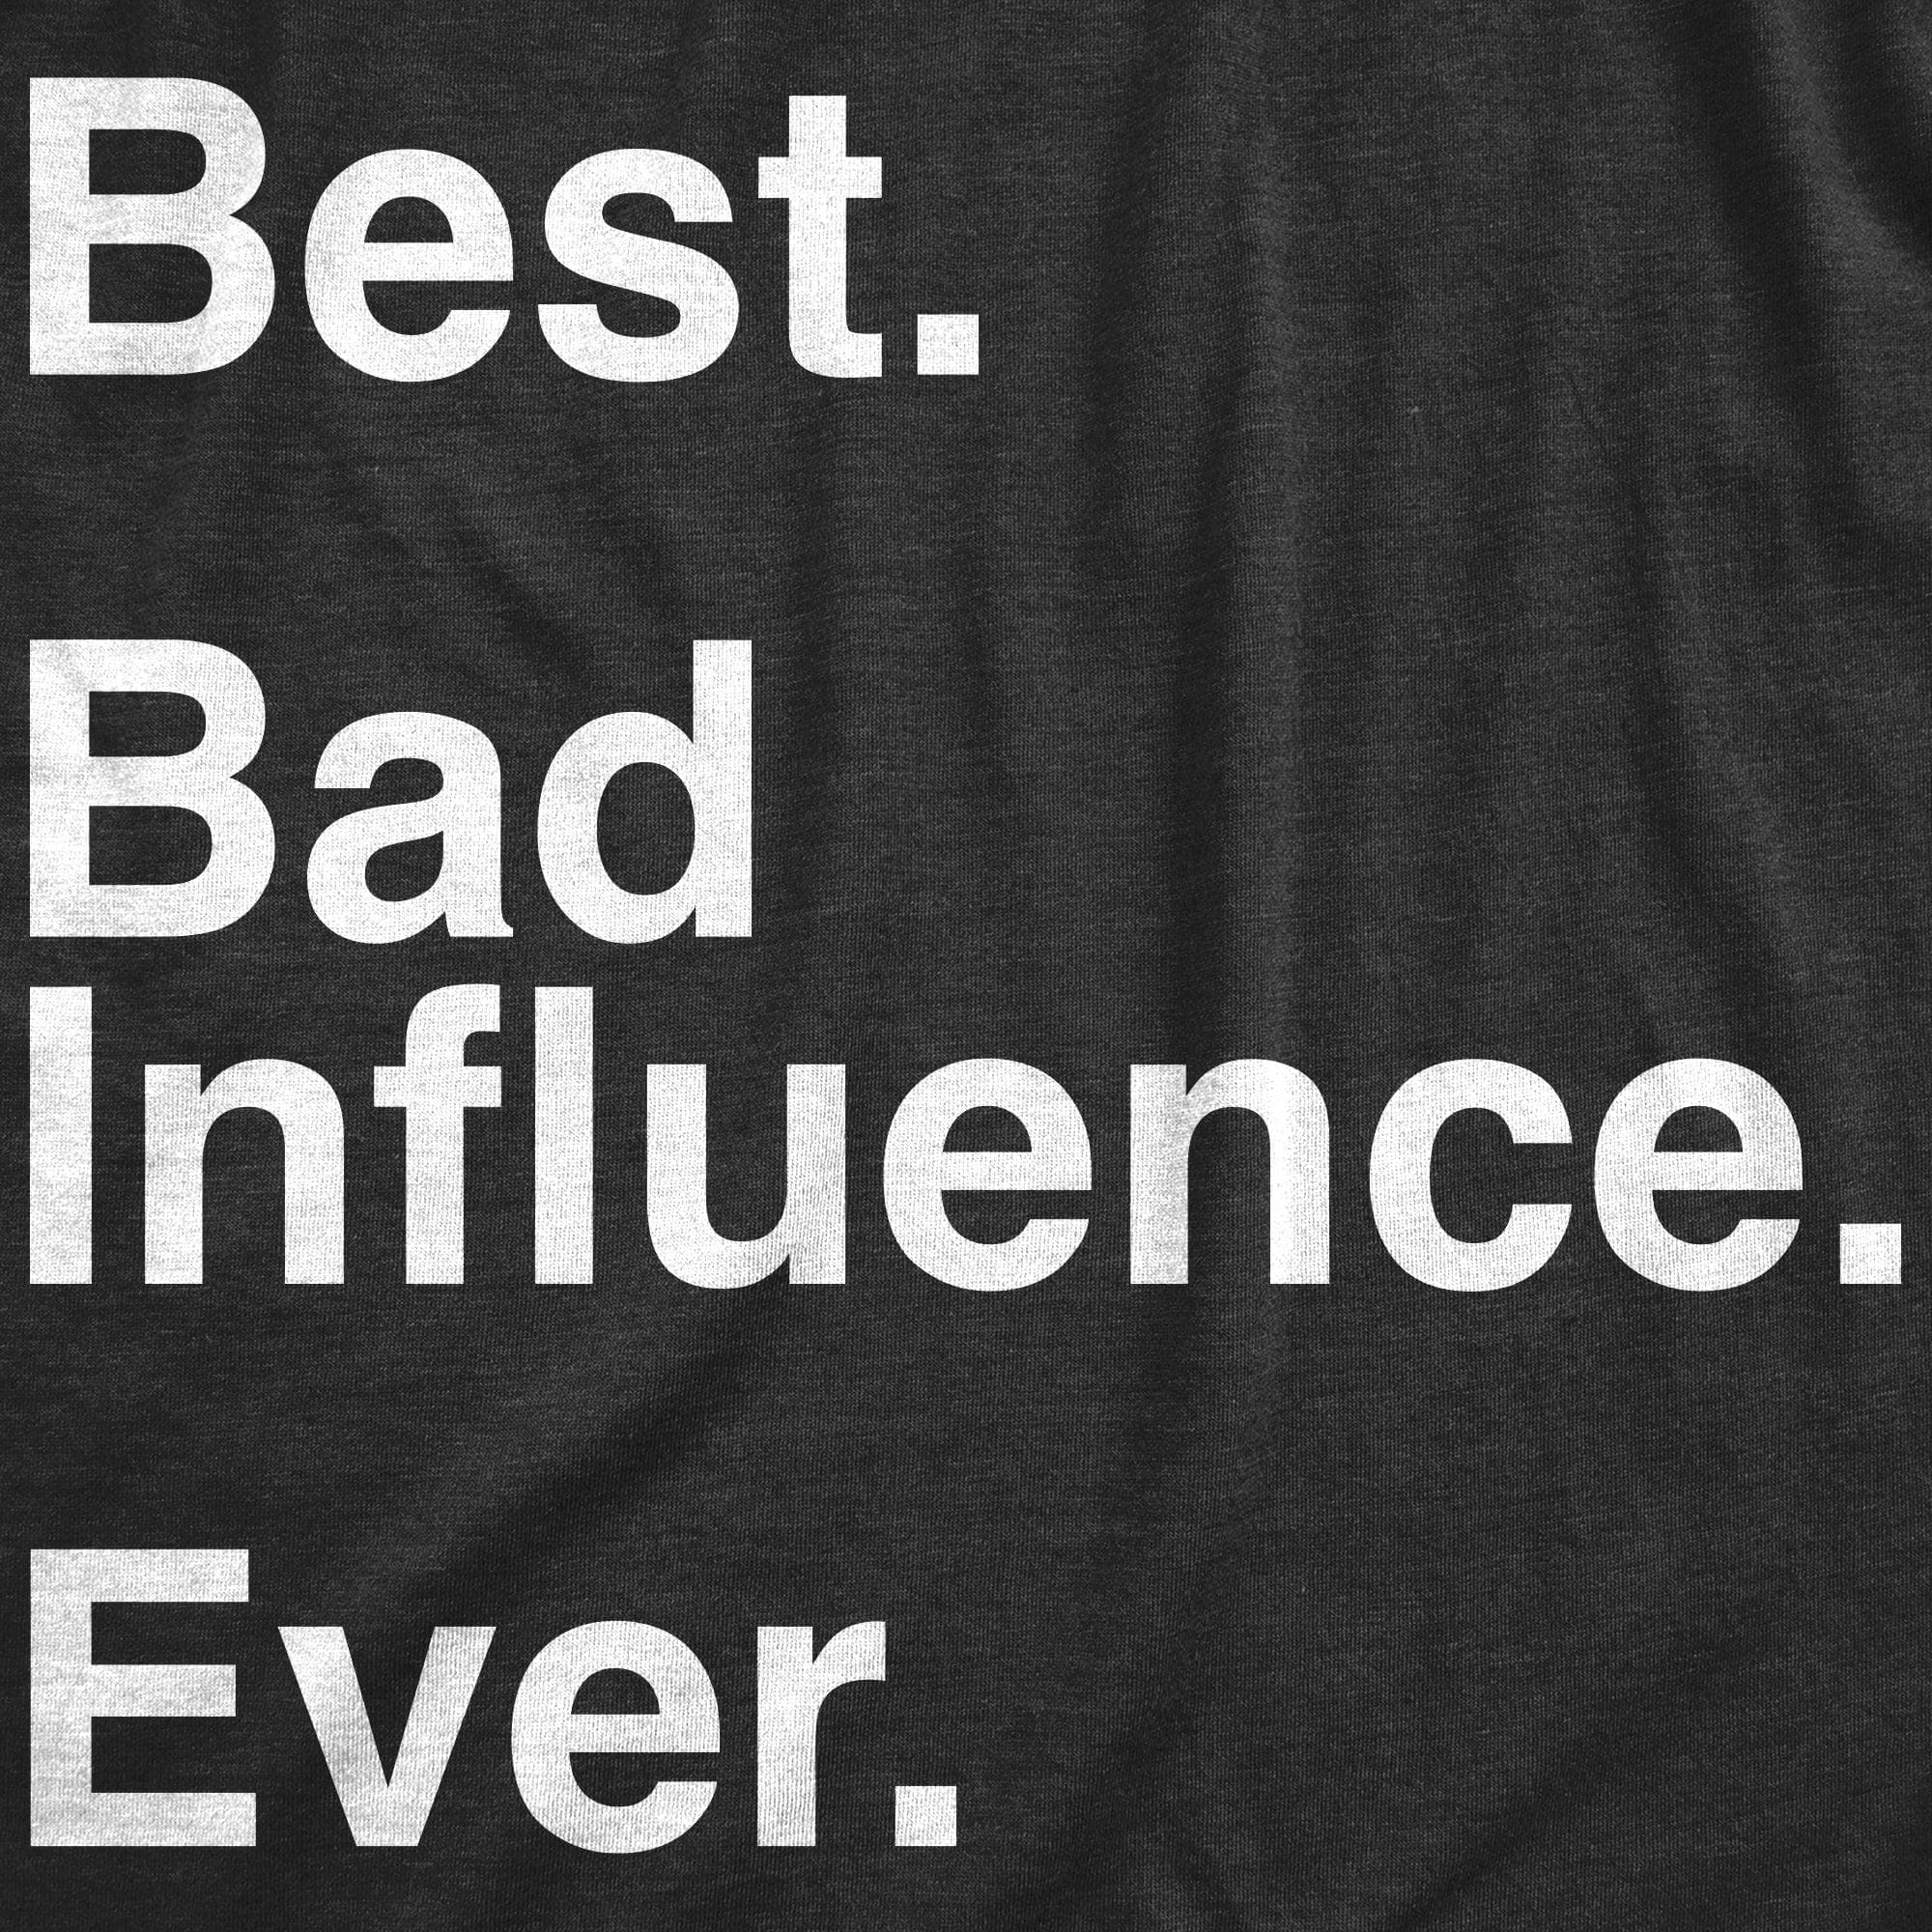 Best Bad Influence Ever Women's Tshirt  -  Crazy Dog T-Shirts